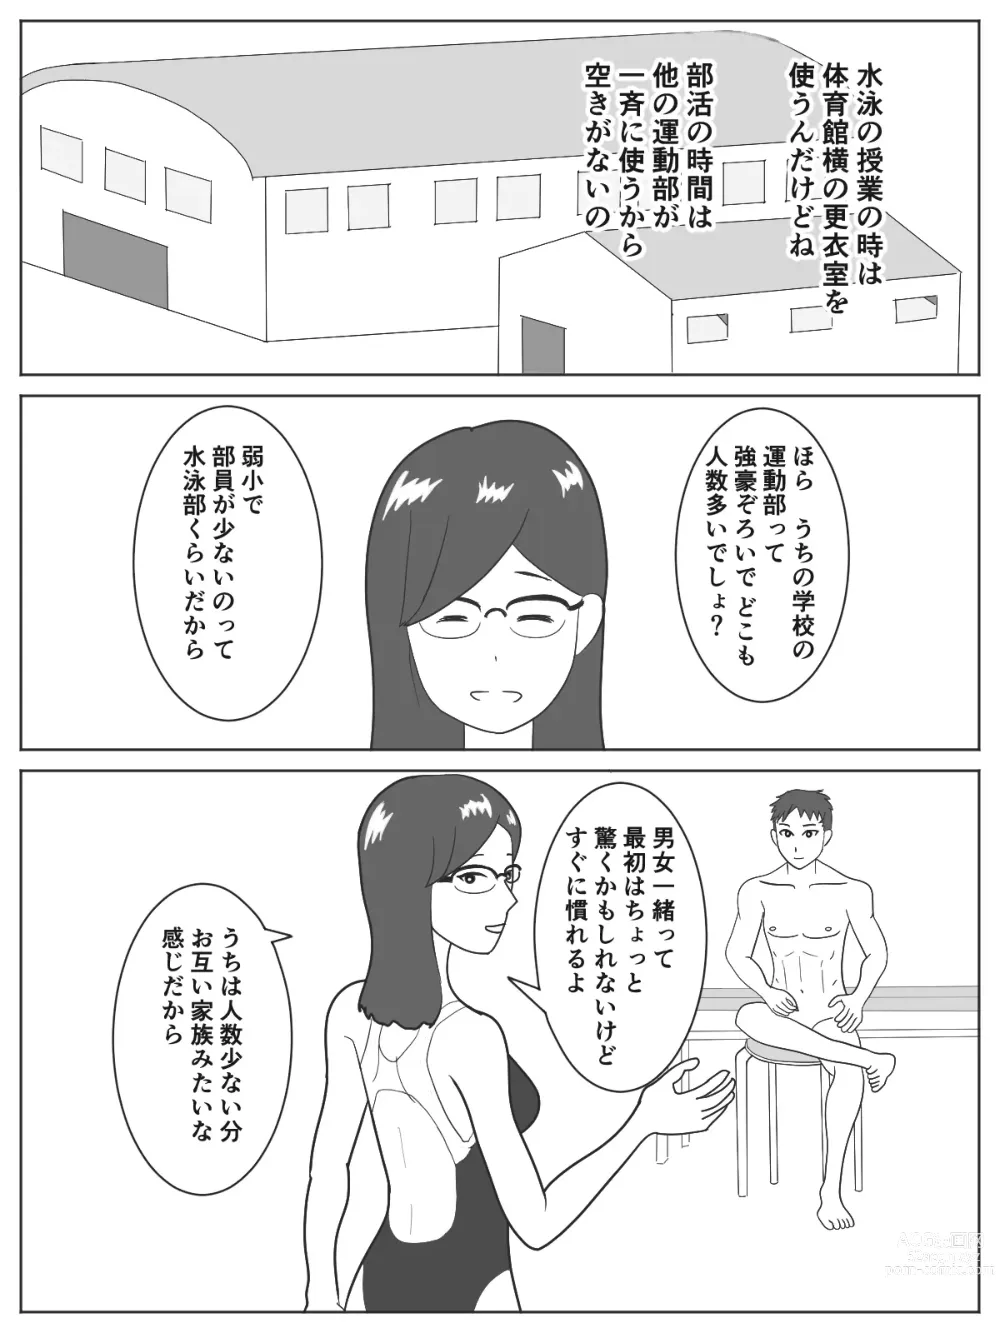 Page 10 of doujinshi Danjo Kyoudou Koi-shitsu